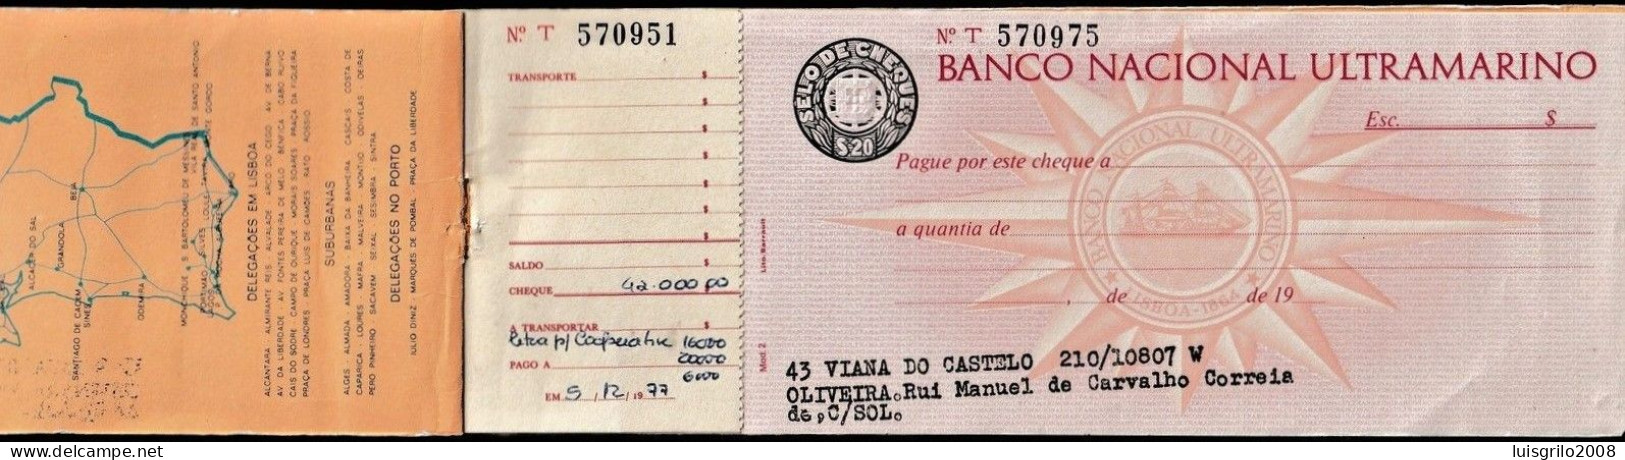 Portugal, Cheque/ Capa Caderneta - Banco Nacional Ultramarino. Viana Do Castelo - Schecks  Und Reiseschecks